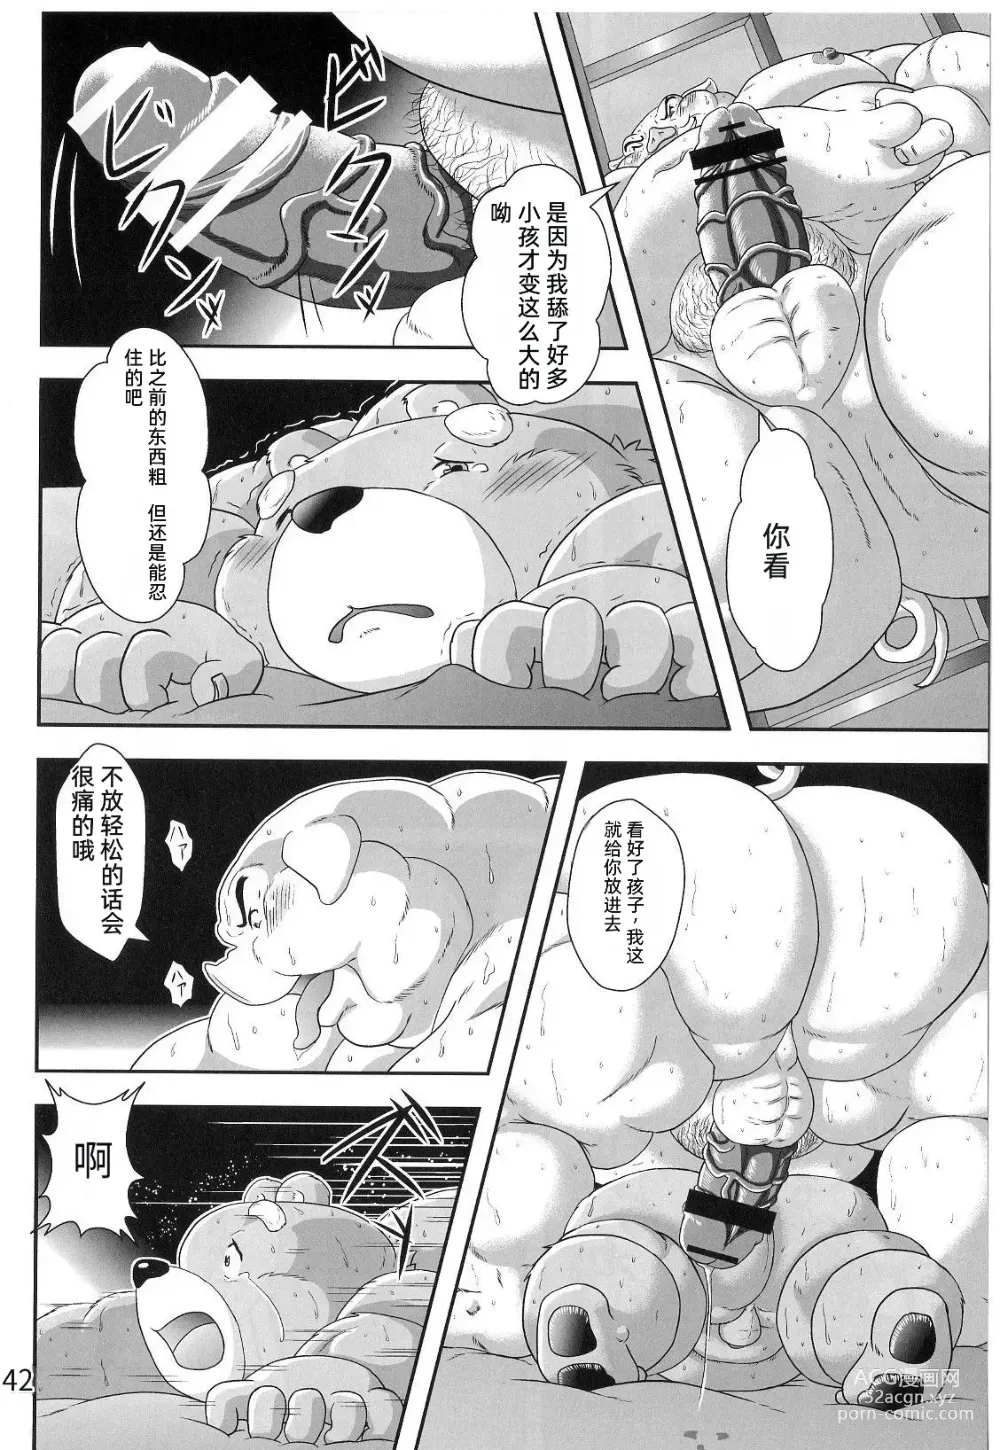 Page 41 of doujinshi 兽之楼郭 月华缭乱 月阴之章